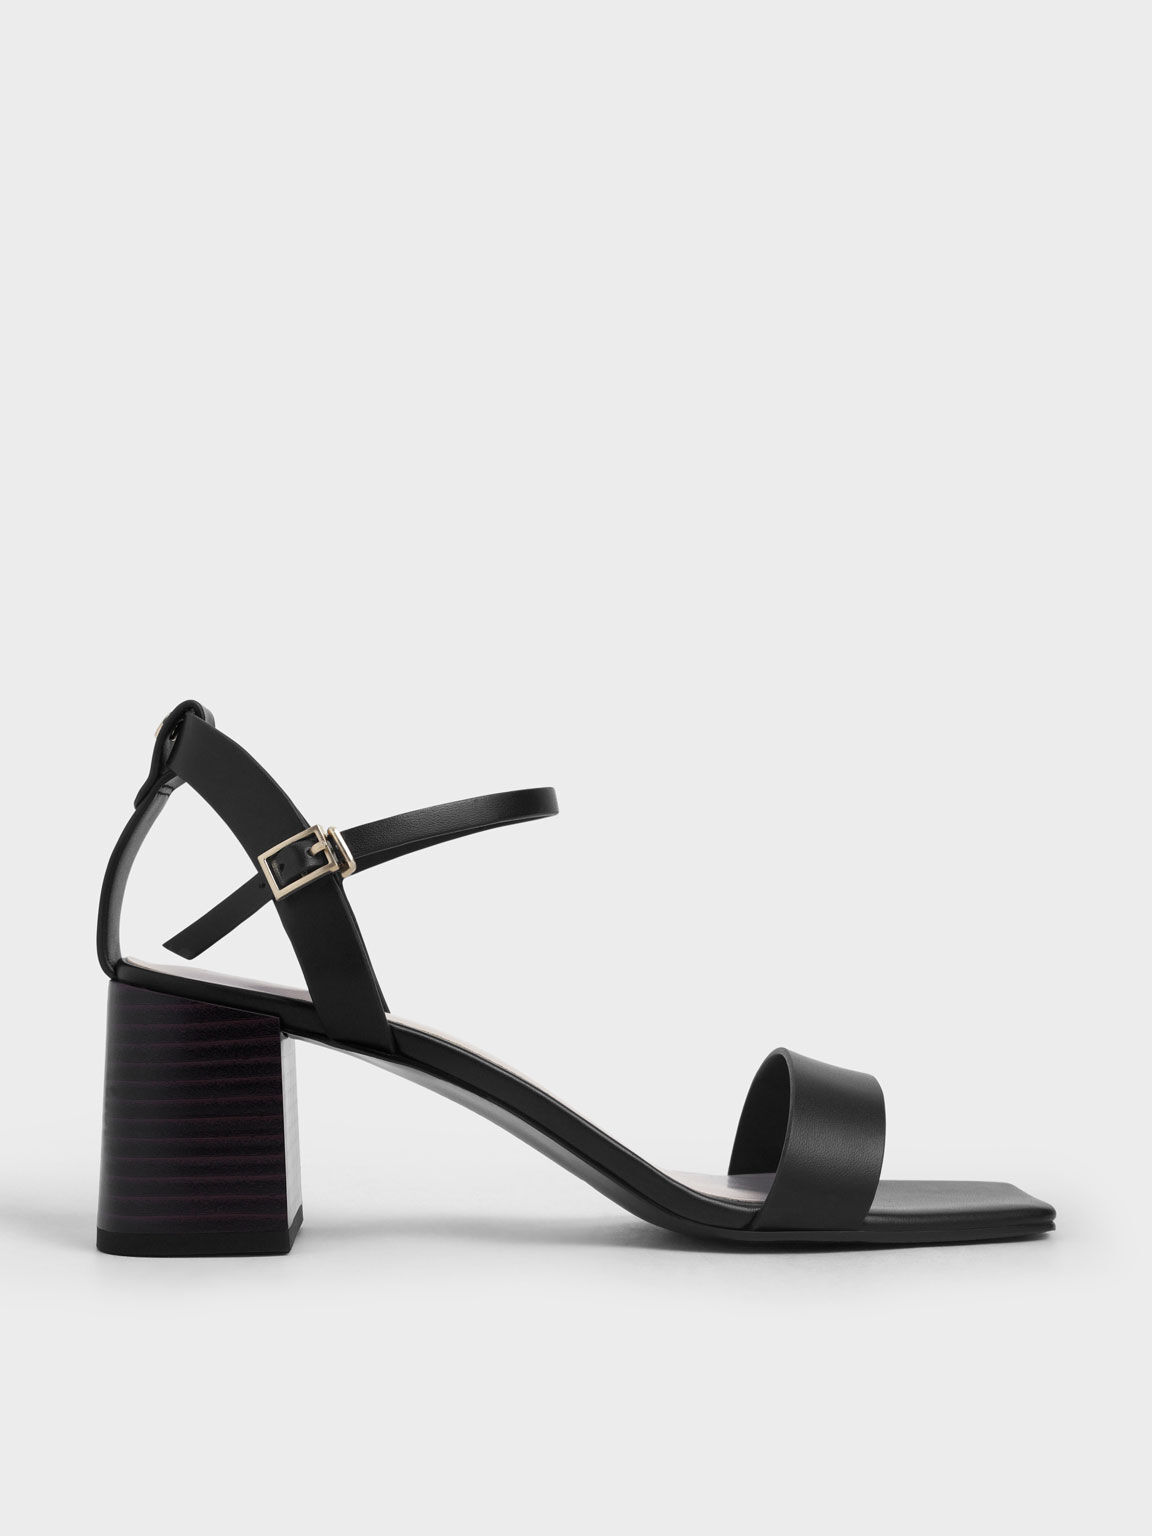 Gabor Maid Ankle Strap Sandals, Black at John Lewis & Partners